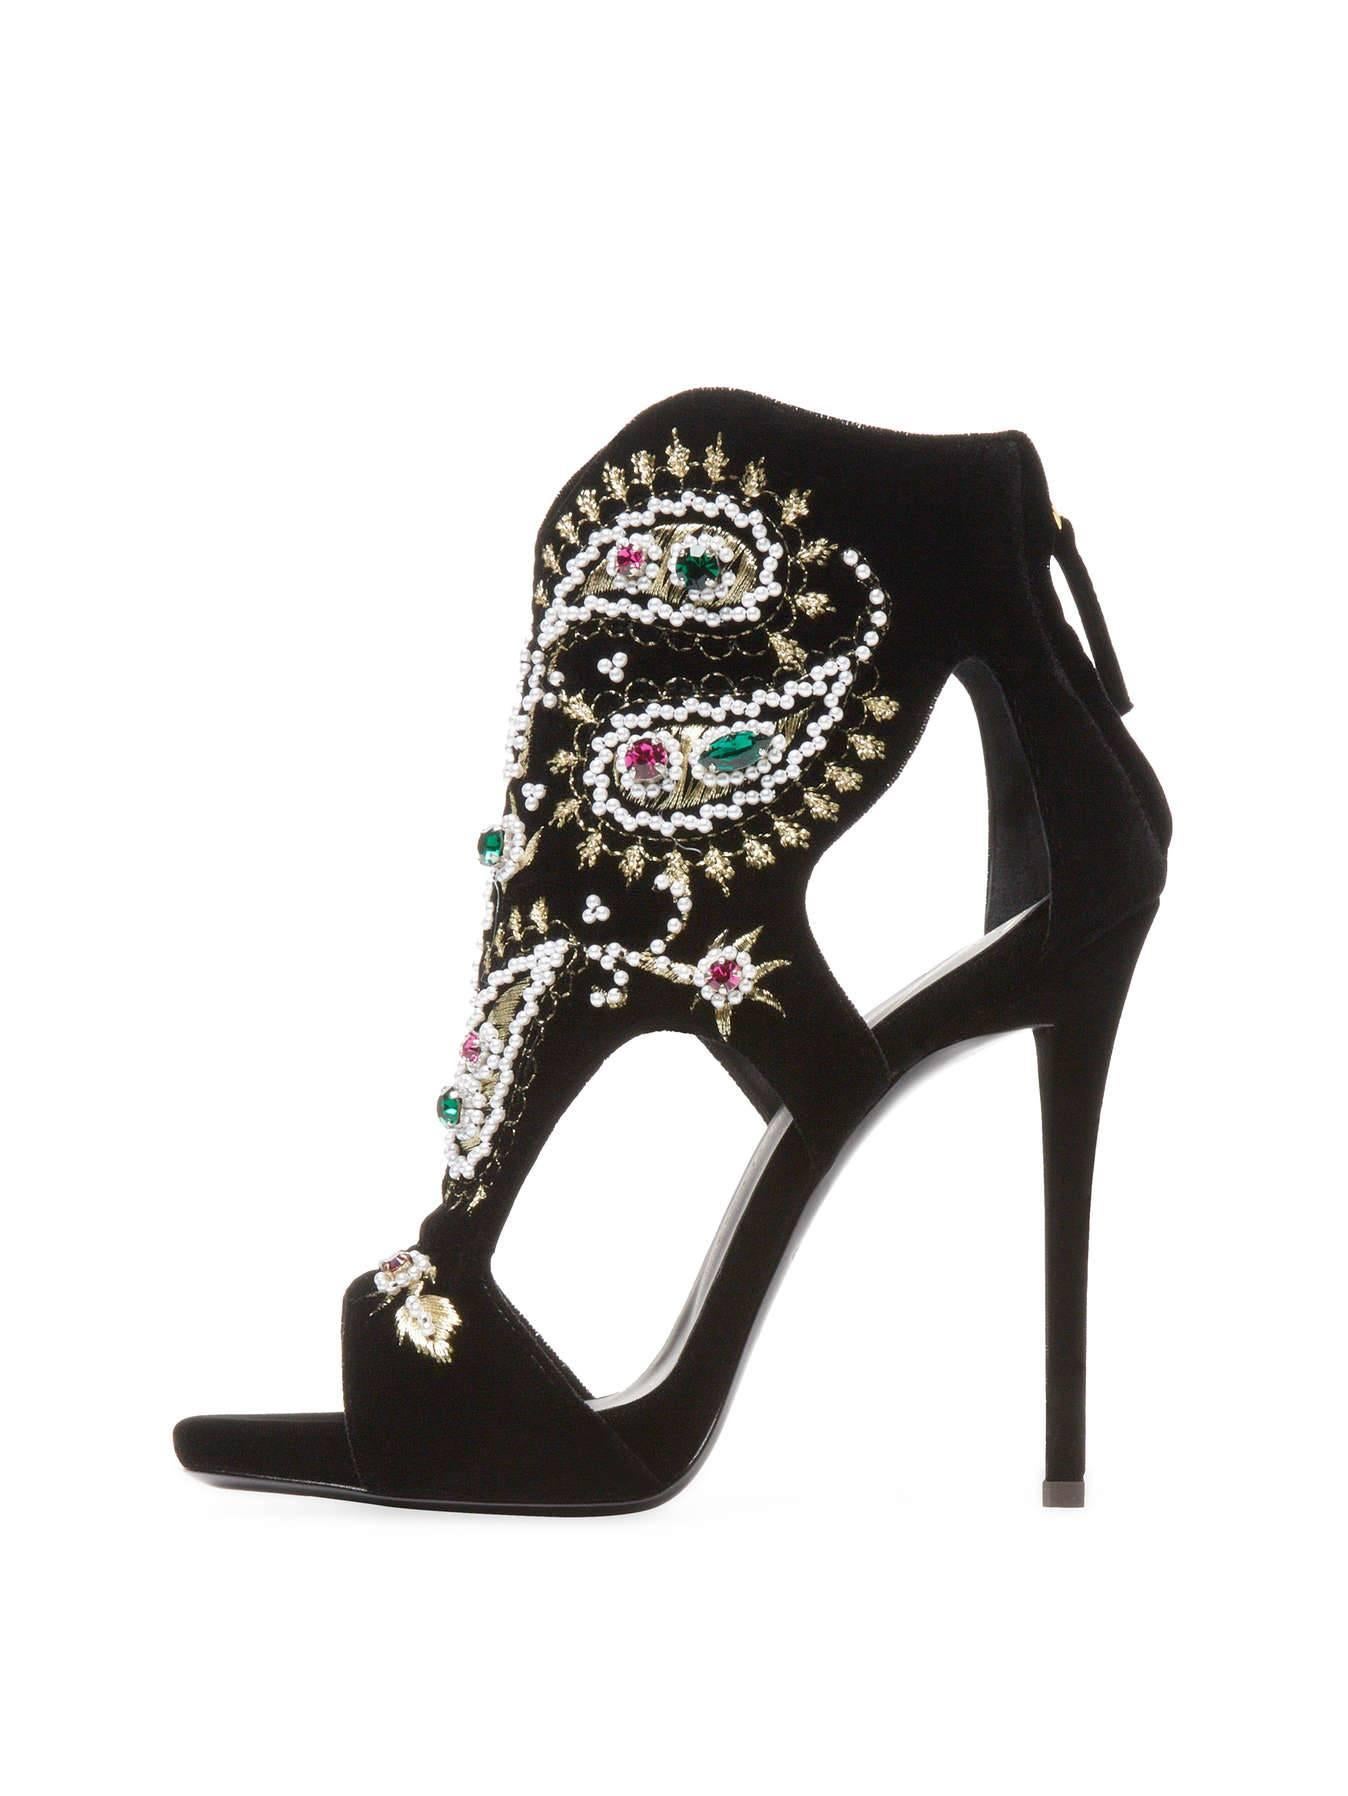 Women's Giuseppe Zanotti NEW & SOLD OUT Black Embellished Bead Jewel Heels in Box